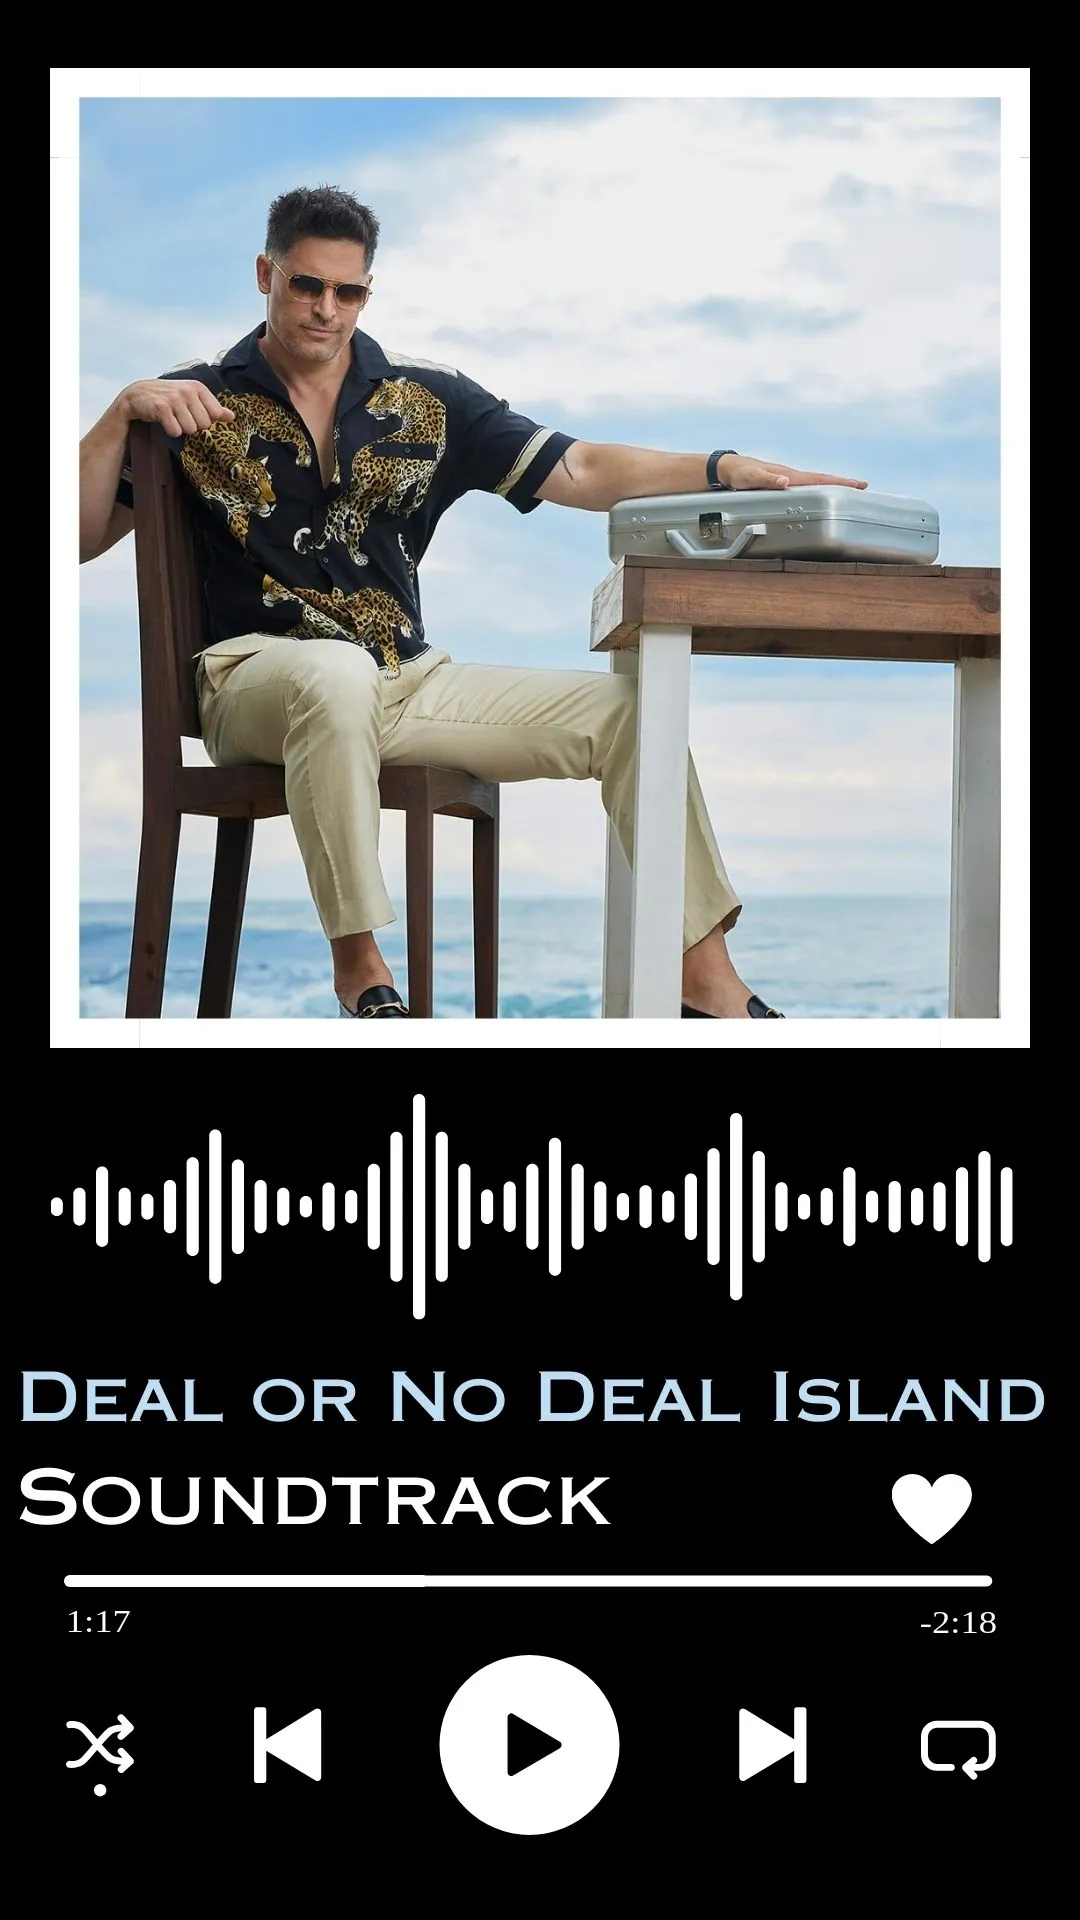 Deal or No Deal Island Soundtrack